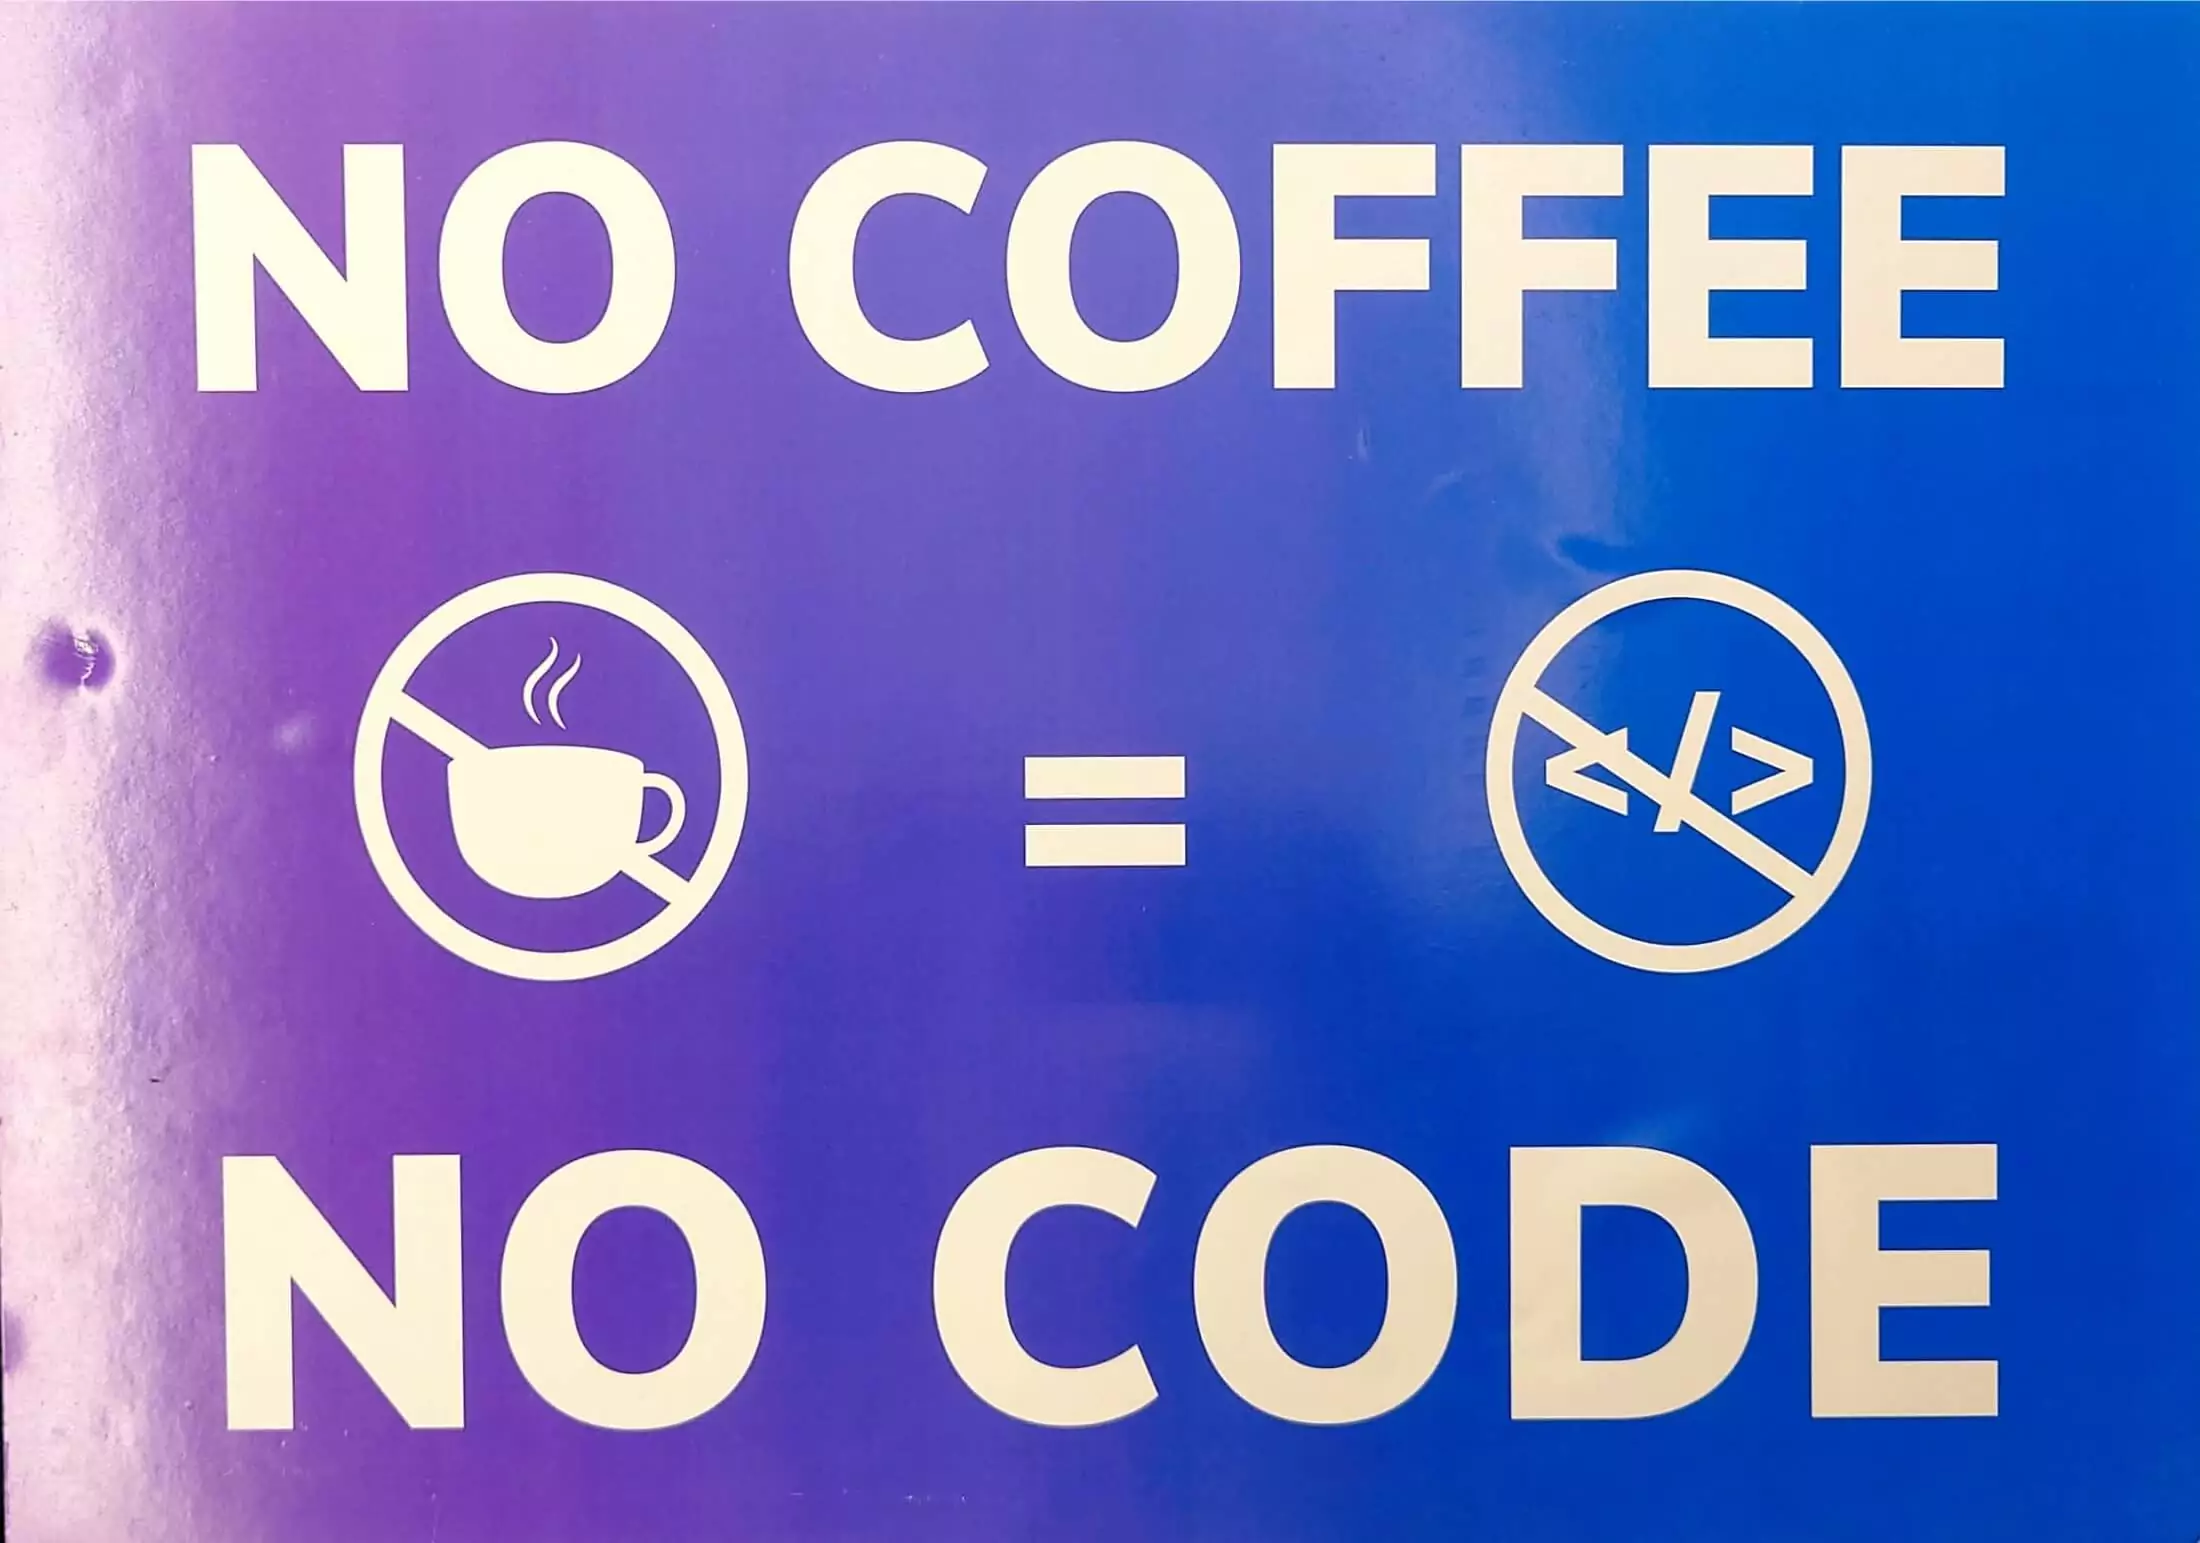 No coffee - no code